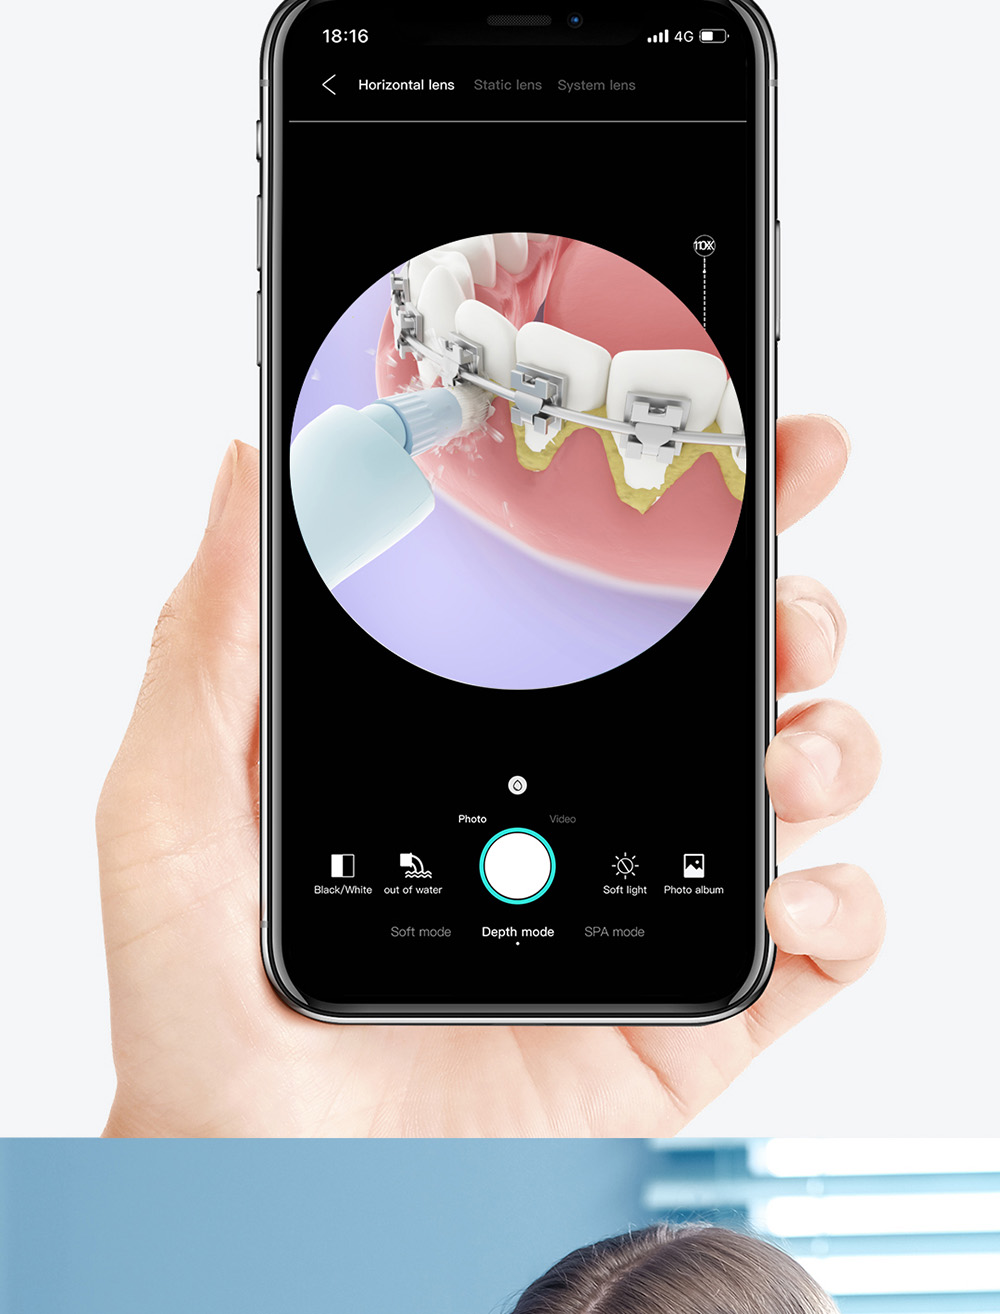 SUNUO C3 PRO Smart Visual Oral Irrigator Dental Washer with UV Sterilization, 5MP HD Camera, WiFi Connection, IPX7 Waterproof - Green